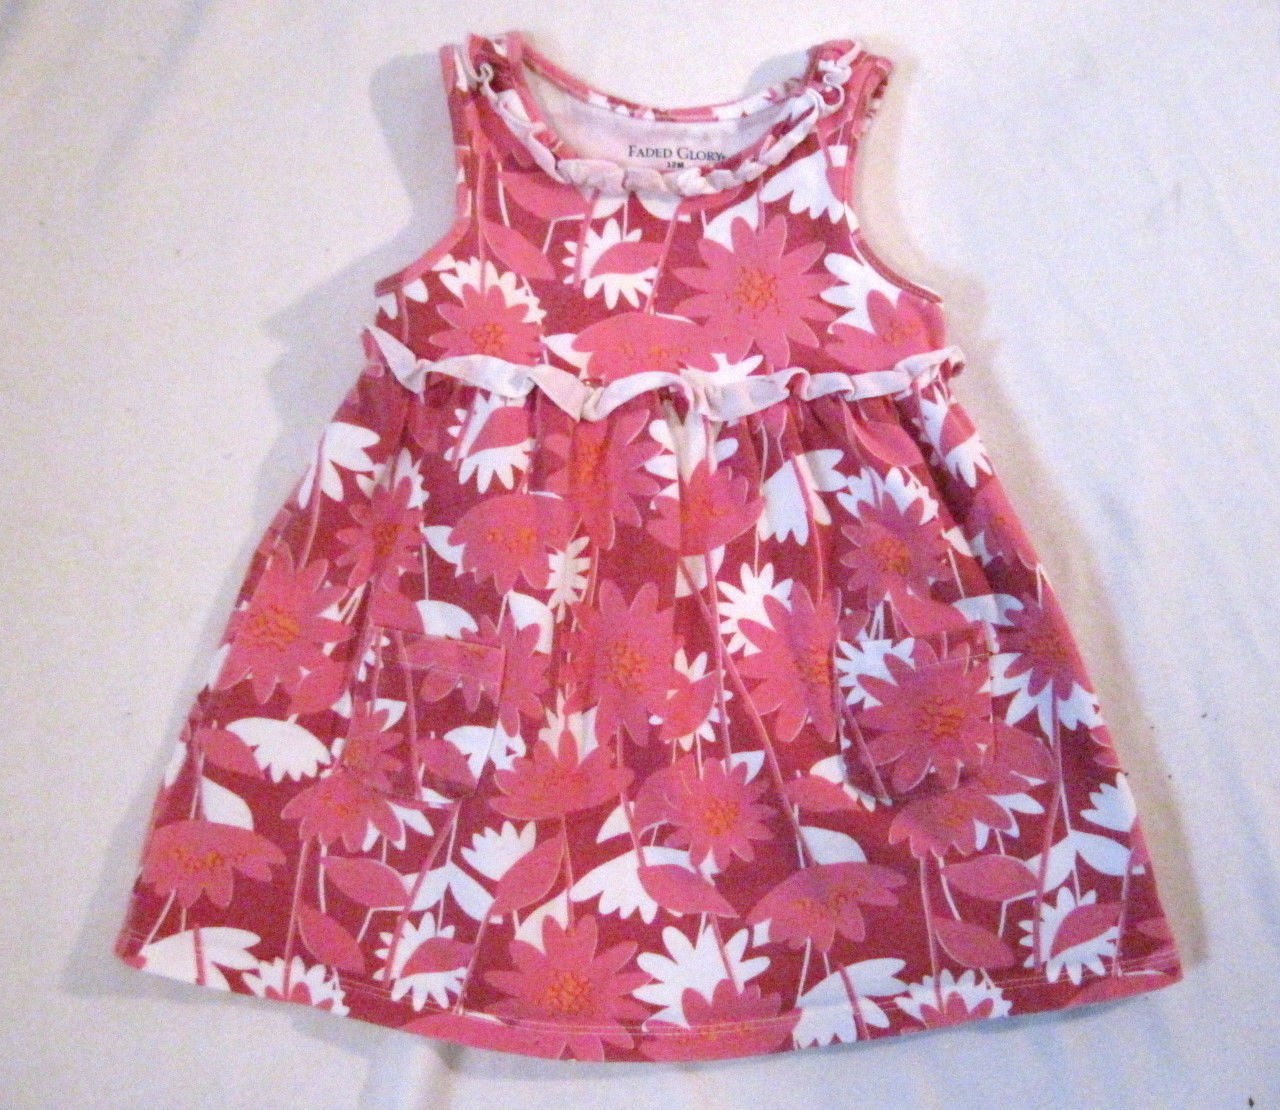 Baby Girl Size 12 MO Faded Glory Pink Print Sundress Cotton Blend Ruffle Trim - $6.75